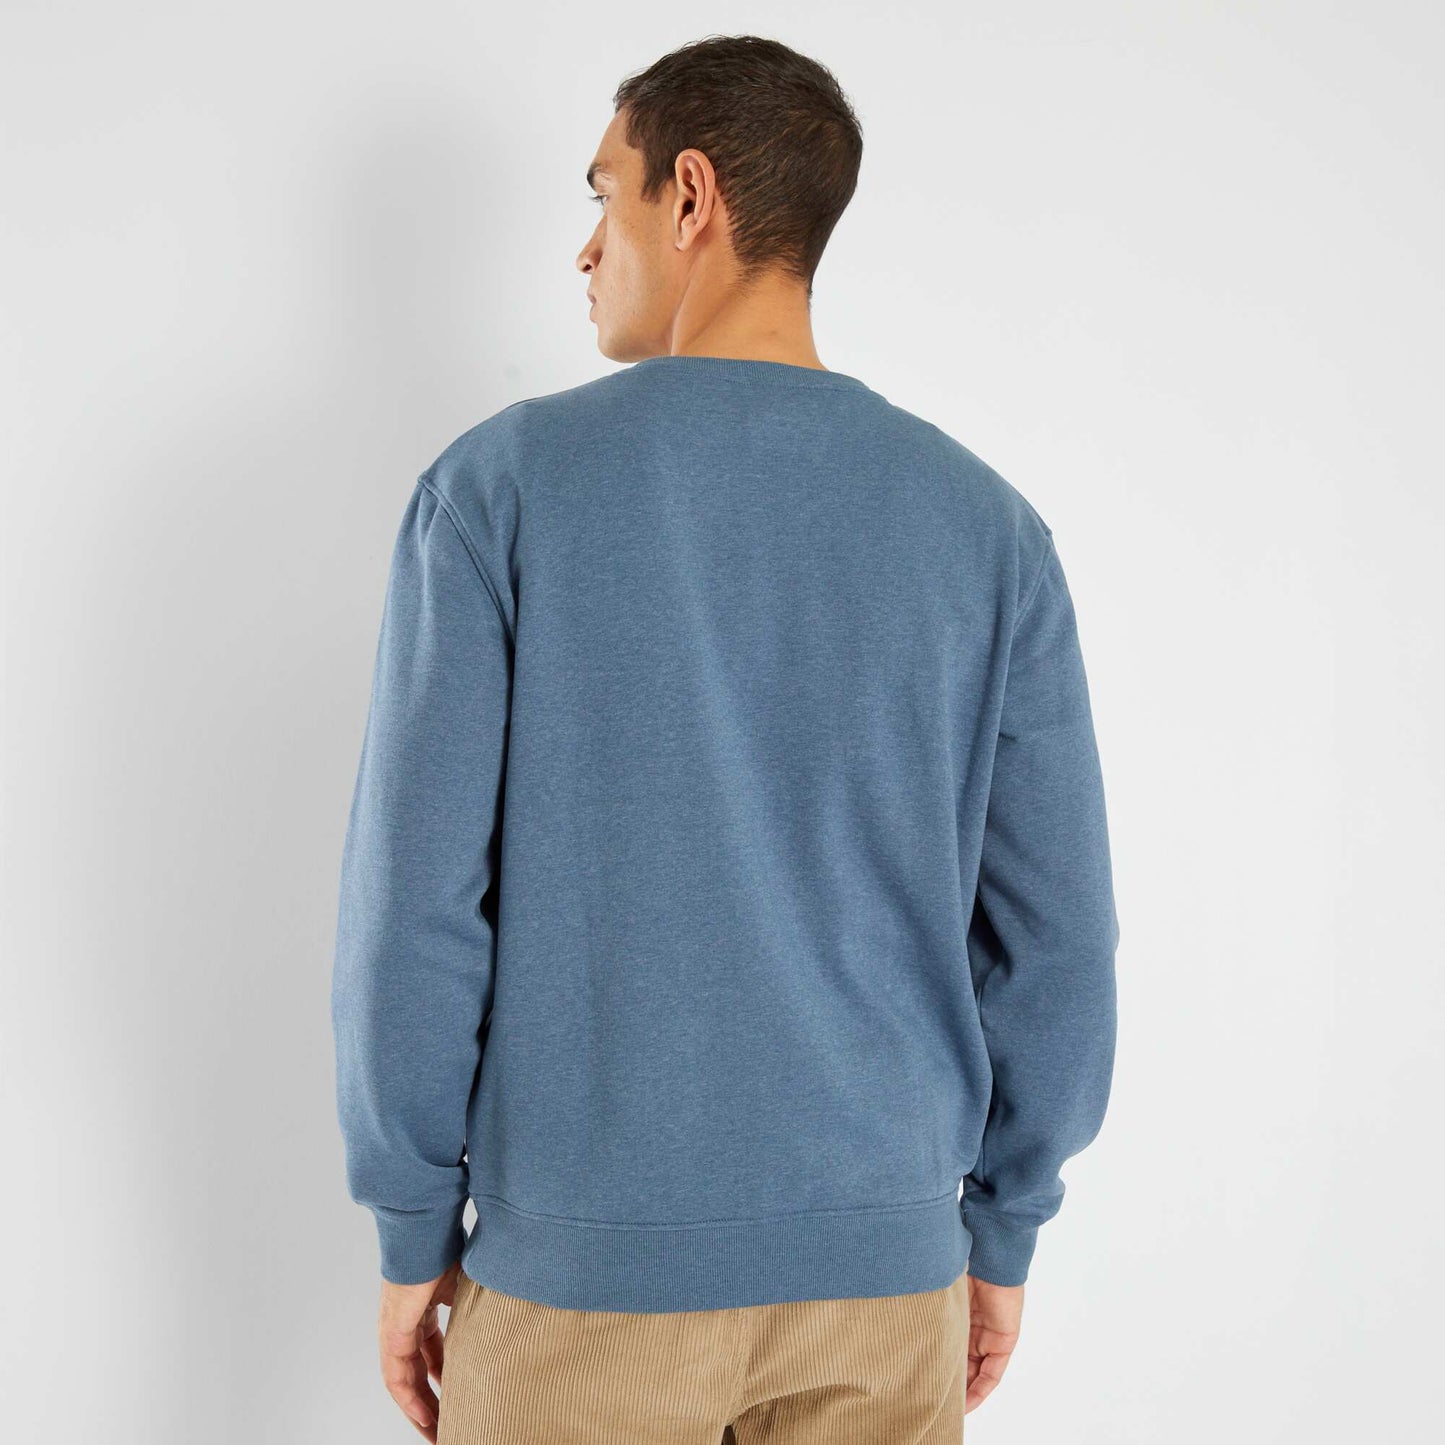 Plain sweatshirt fabric sweater BLUE